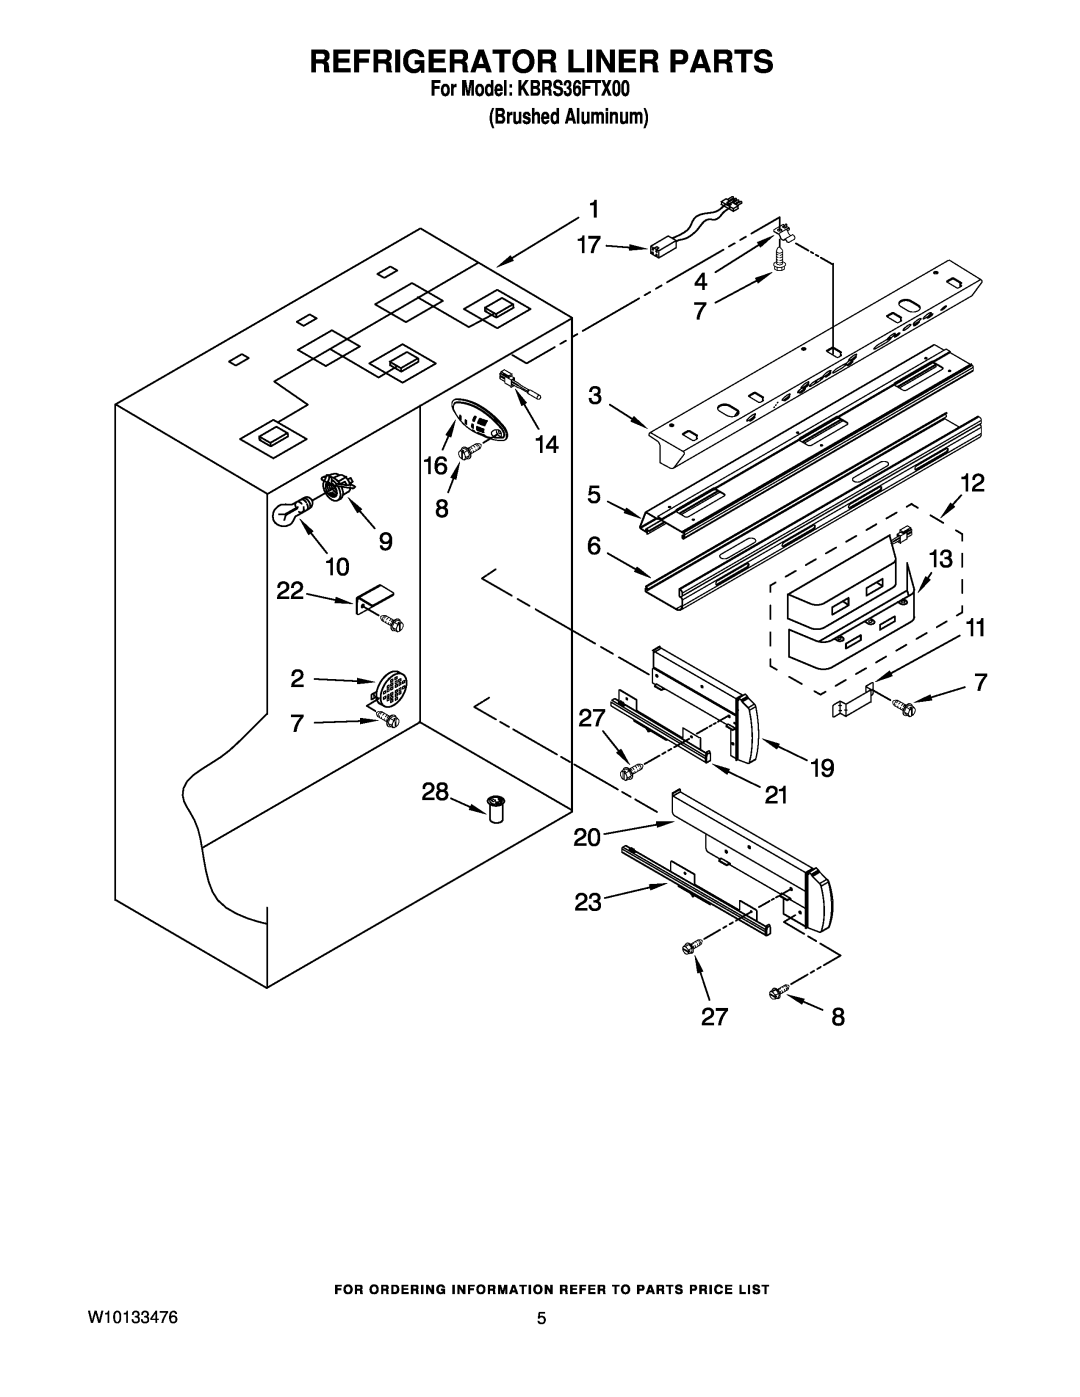 KitchenAid manual Refrigerator Liner Parts, W10133476, For Model KBRS36FTX00 Brushed Aluminum 